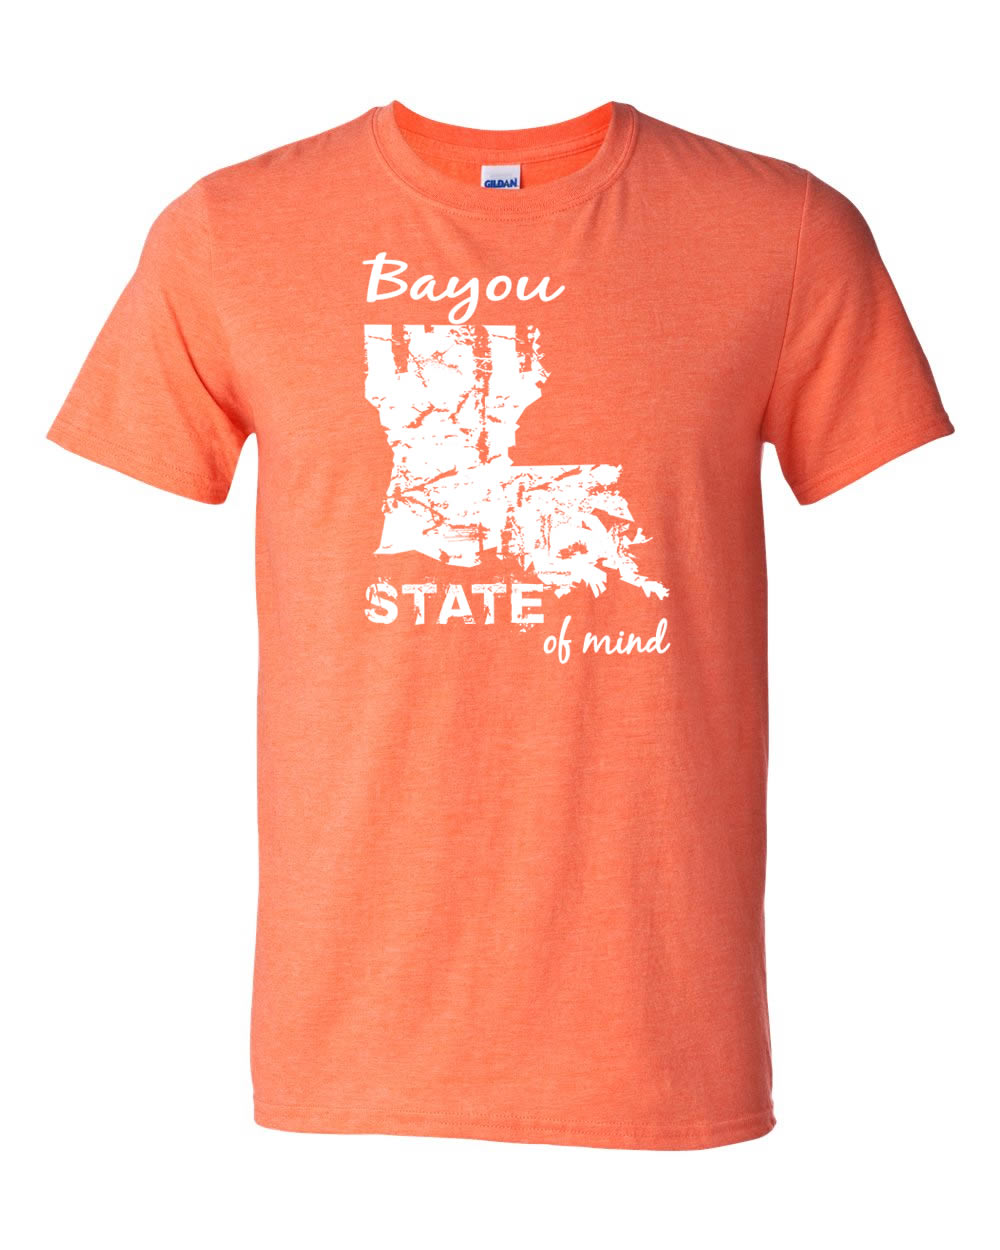 Orange: Bayou State of Mind